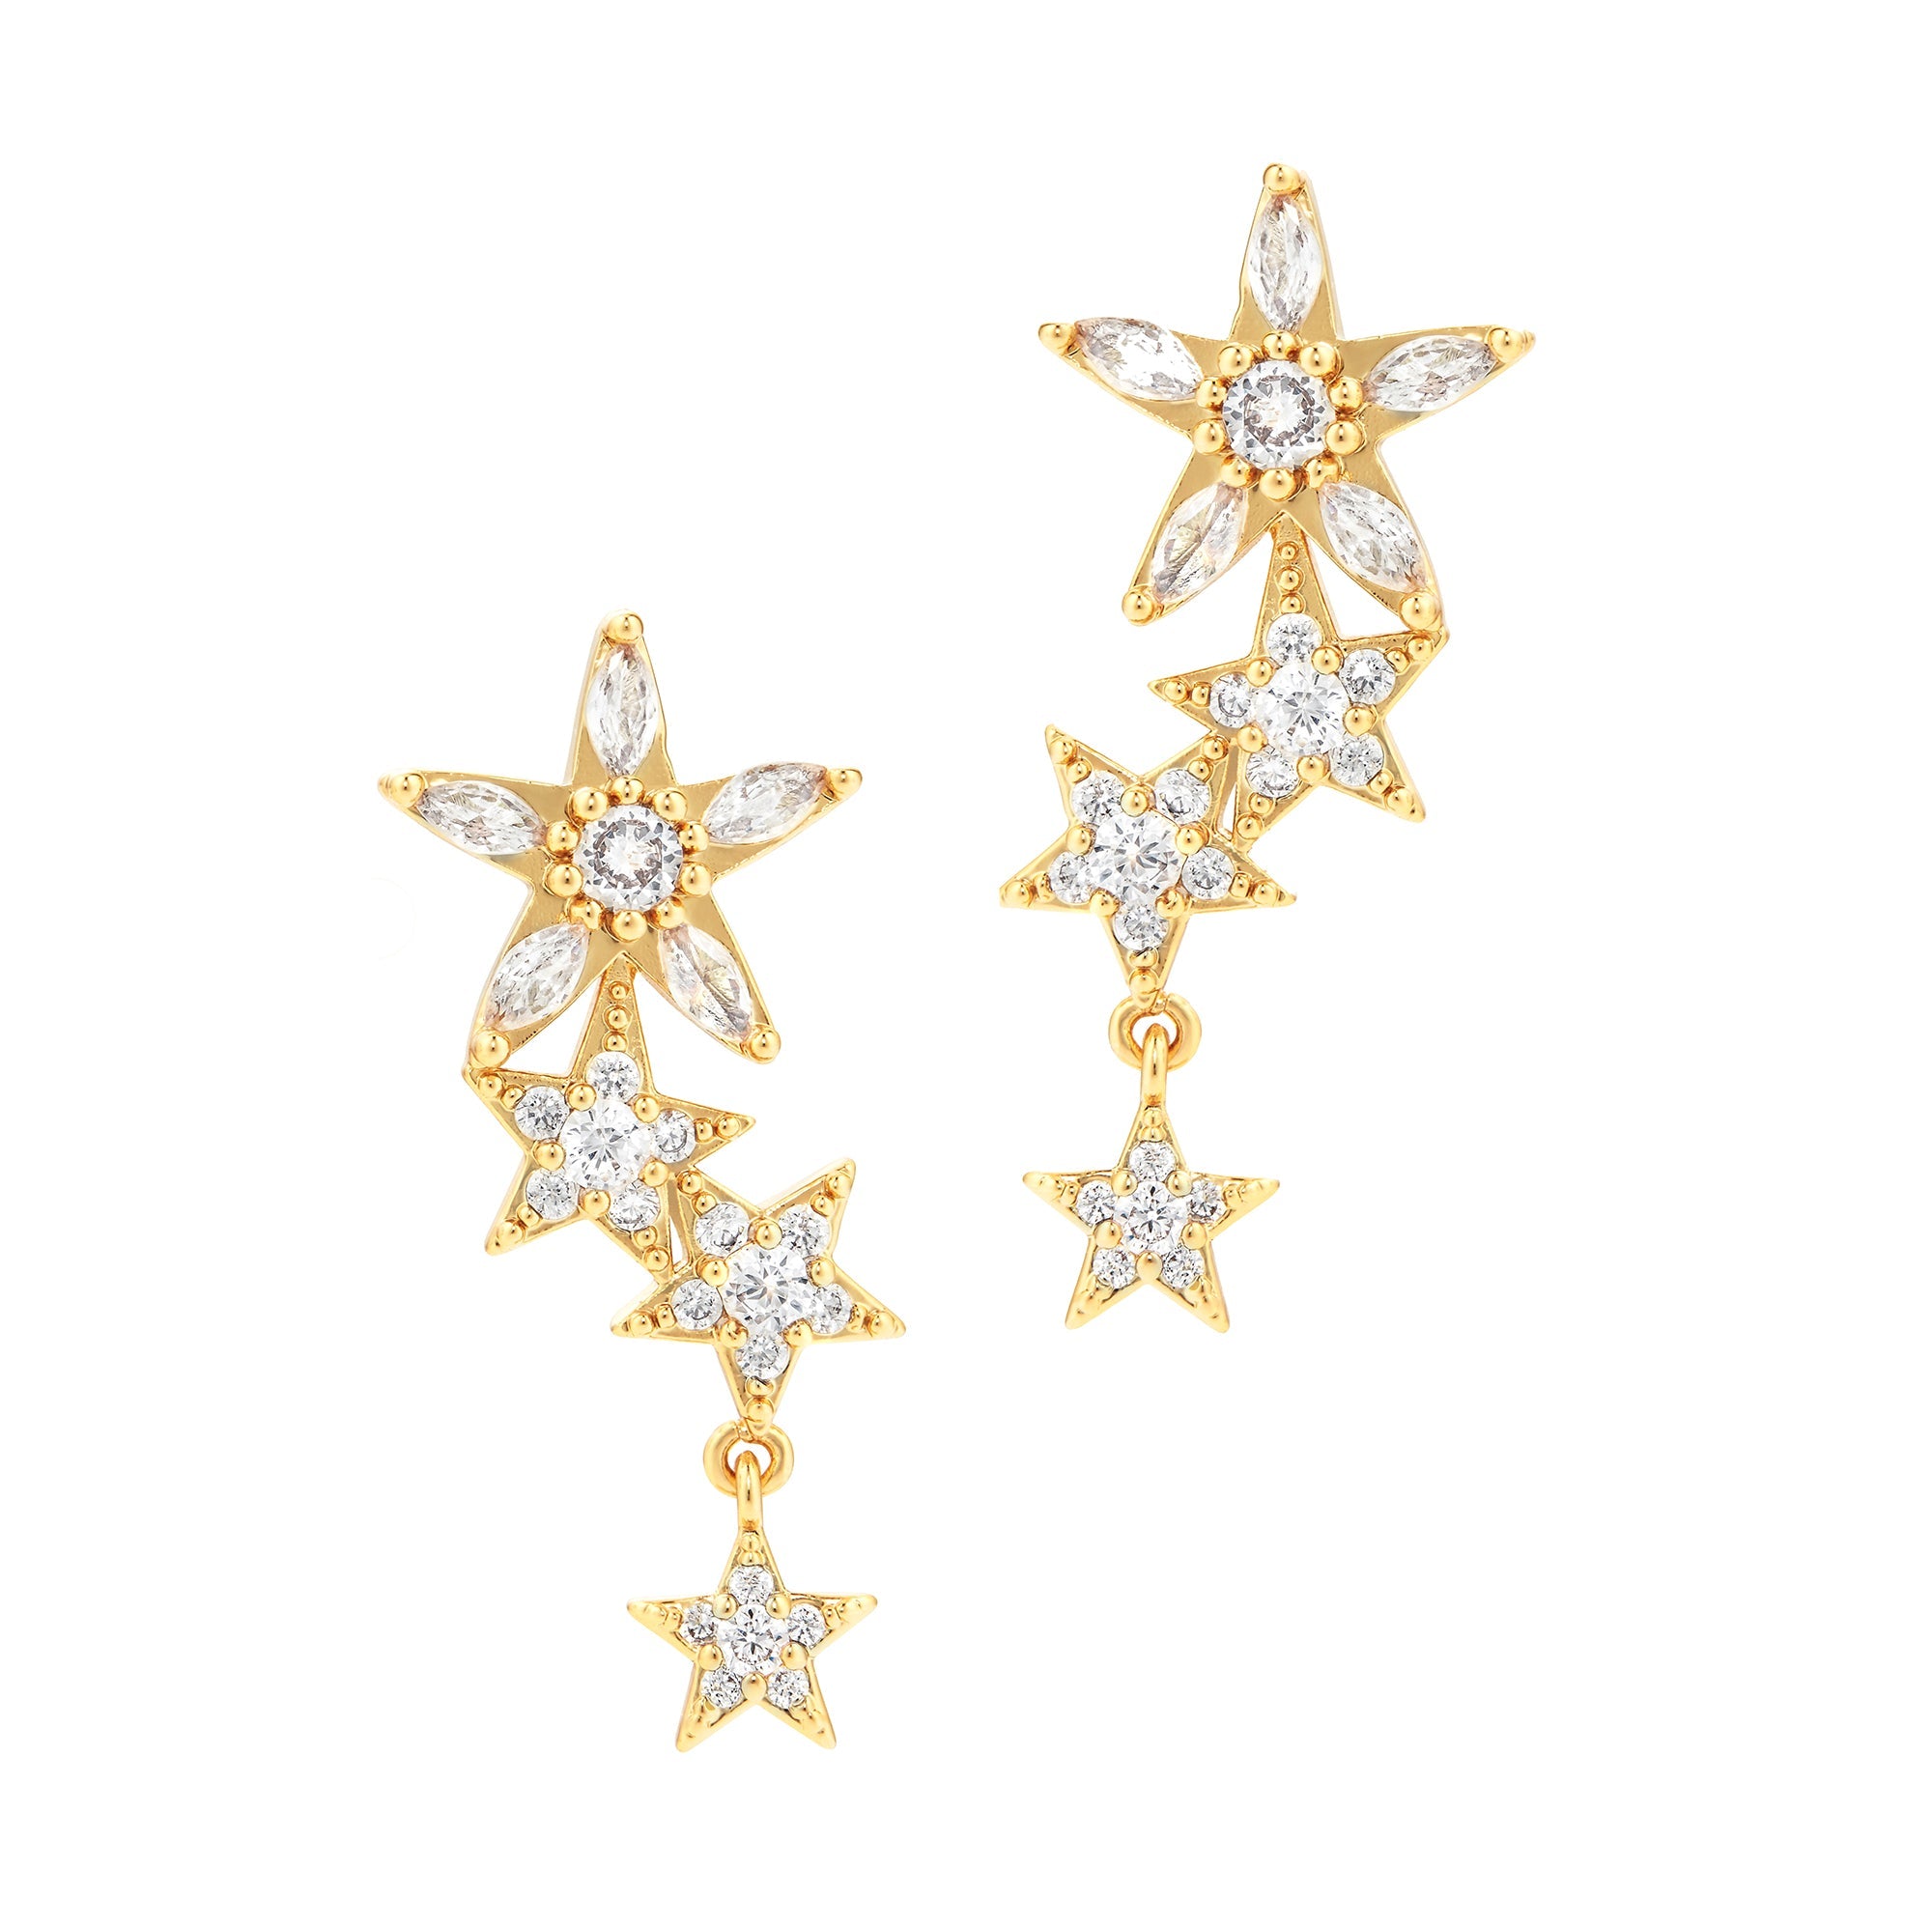 Royal Stars Earrings